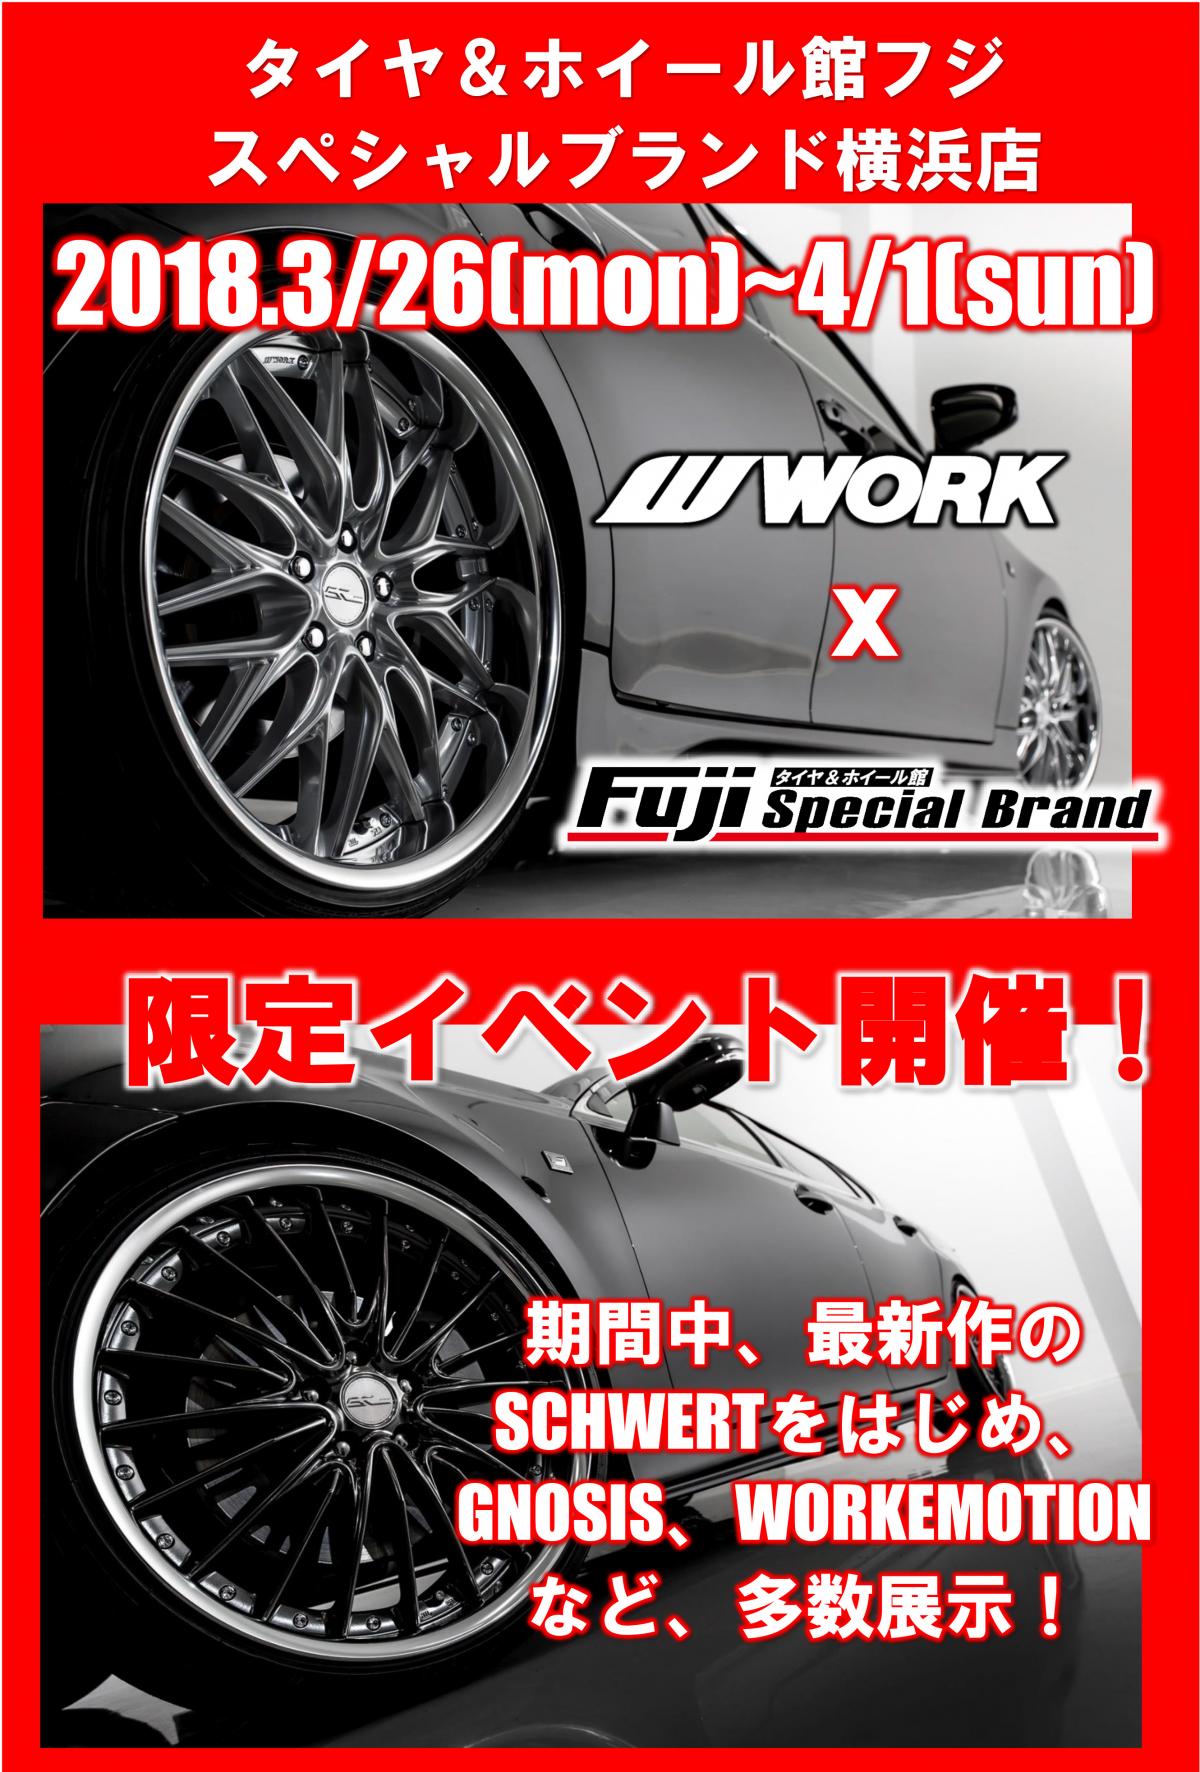 Tire & Wheel House Fuji Special Brand Yokohama Store Limited Event